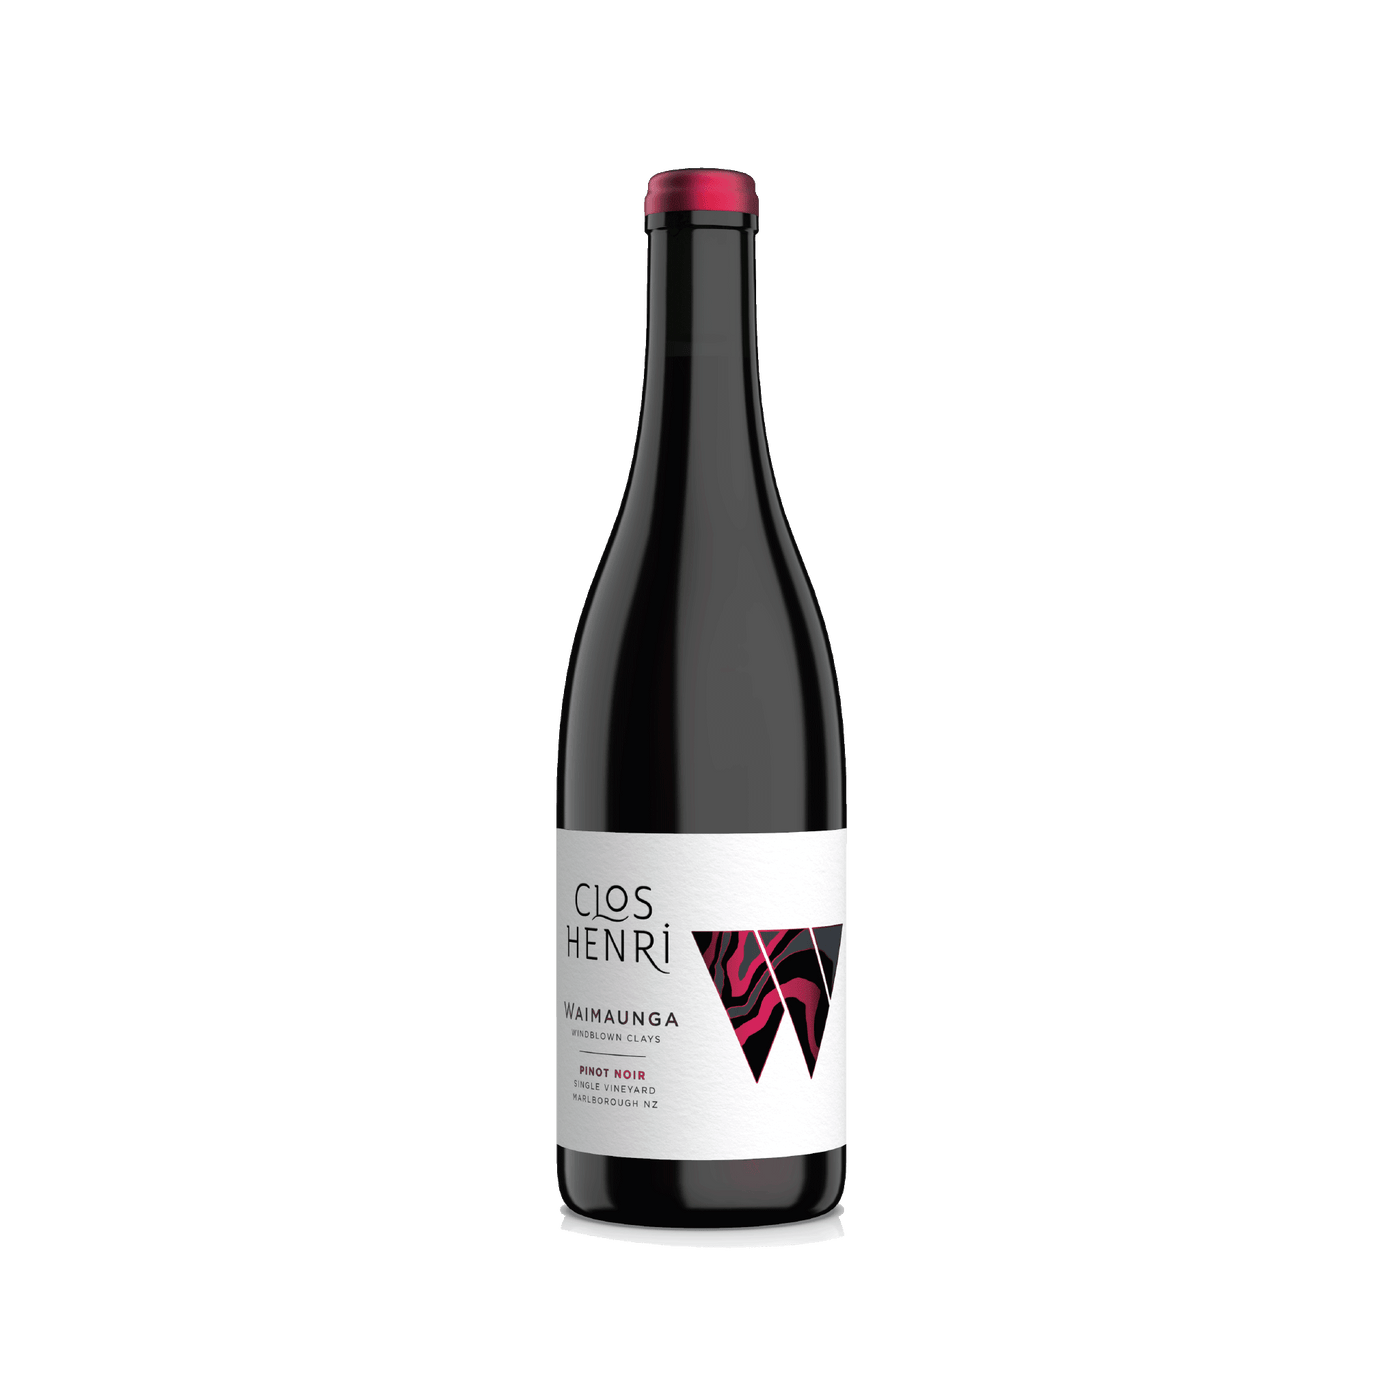 Waimaunga Pinot Noir 2020